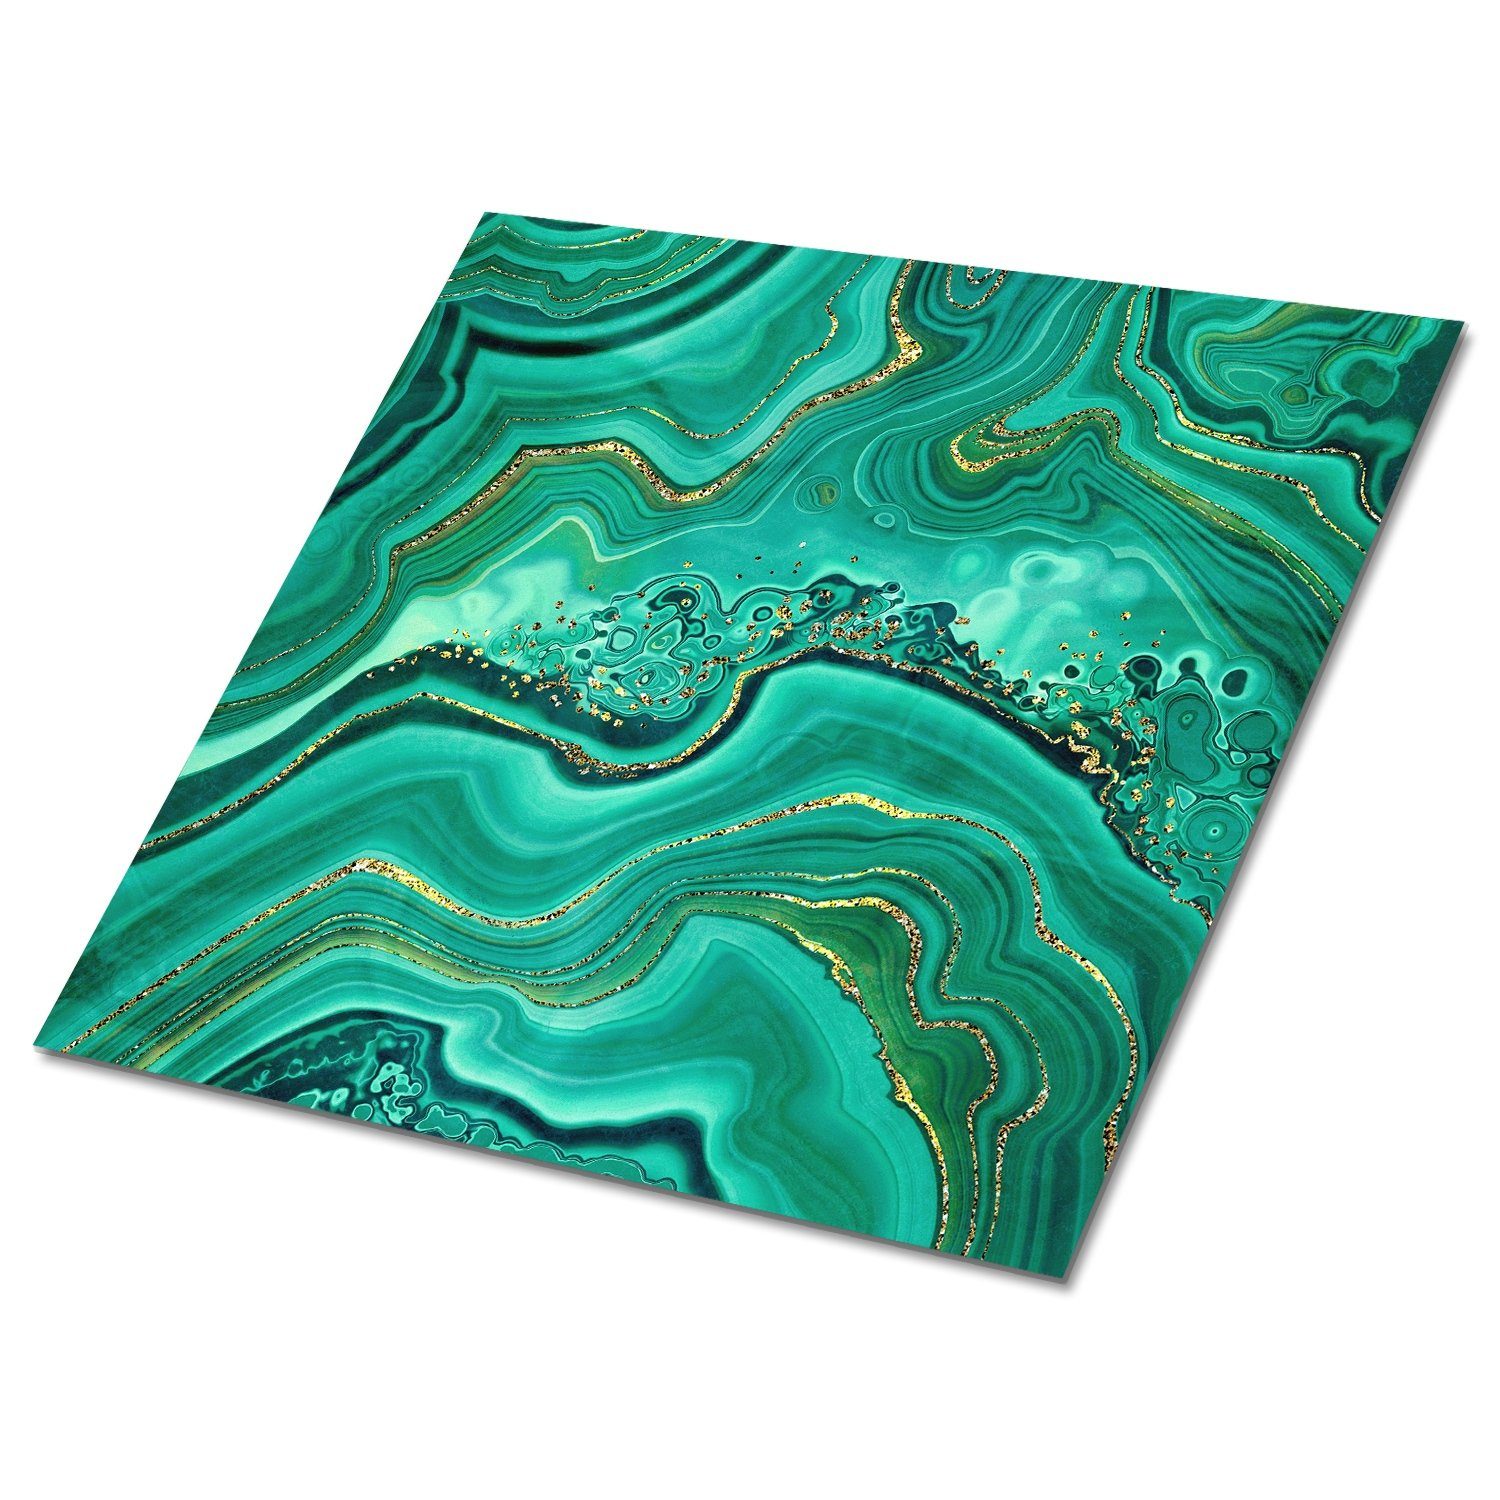 Tulup Vinylfliesen PVC Selbstklebende Fliesen Platten 30 cm x 30 cm Wandpaneele 9 Stück